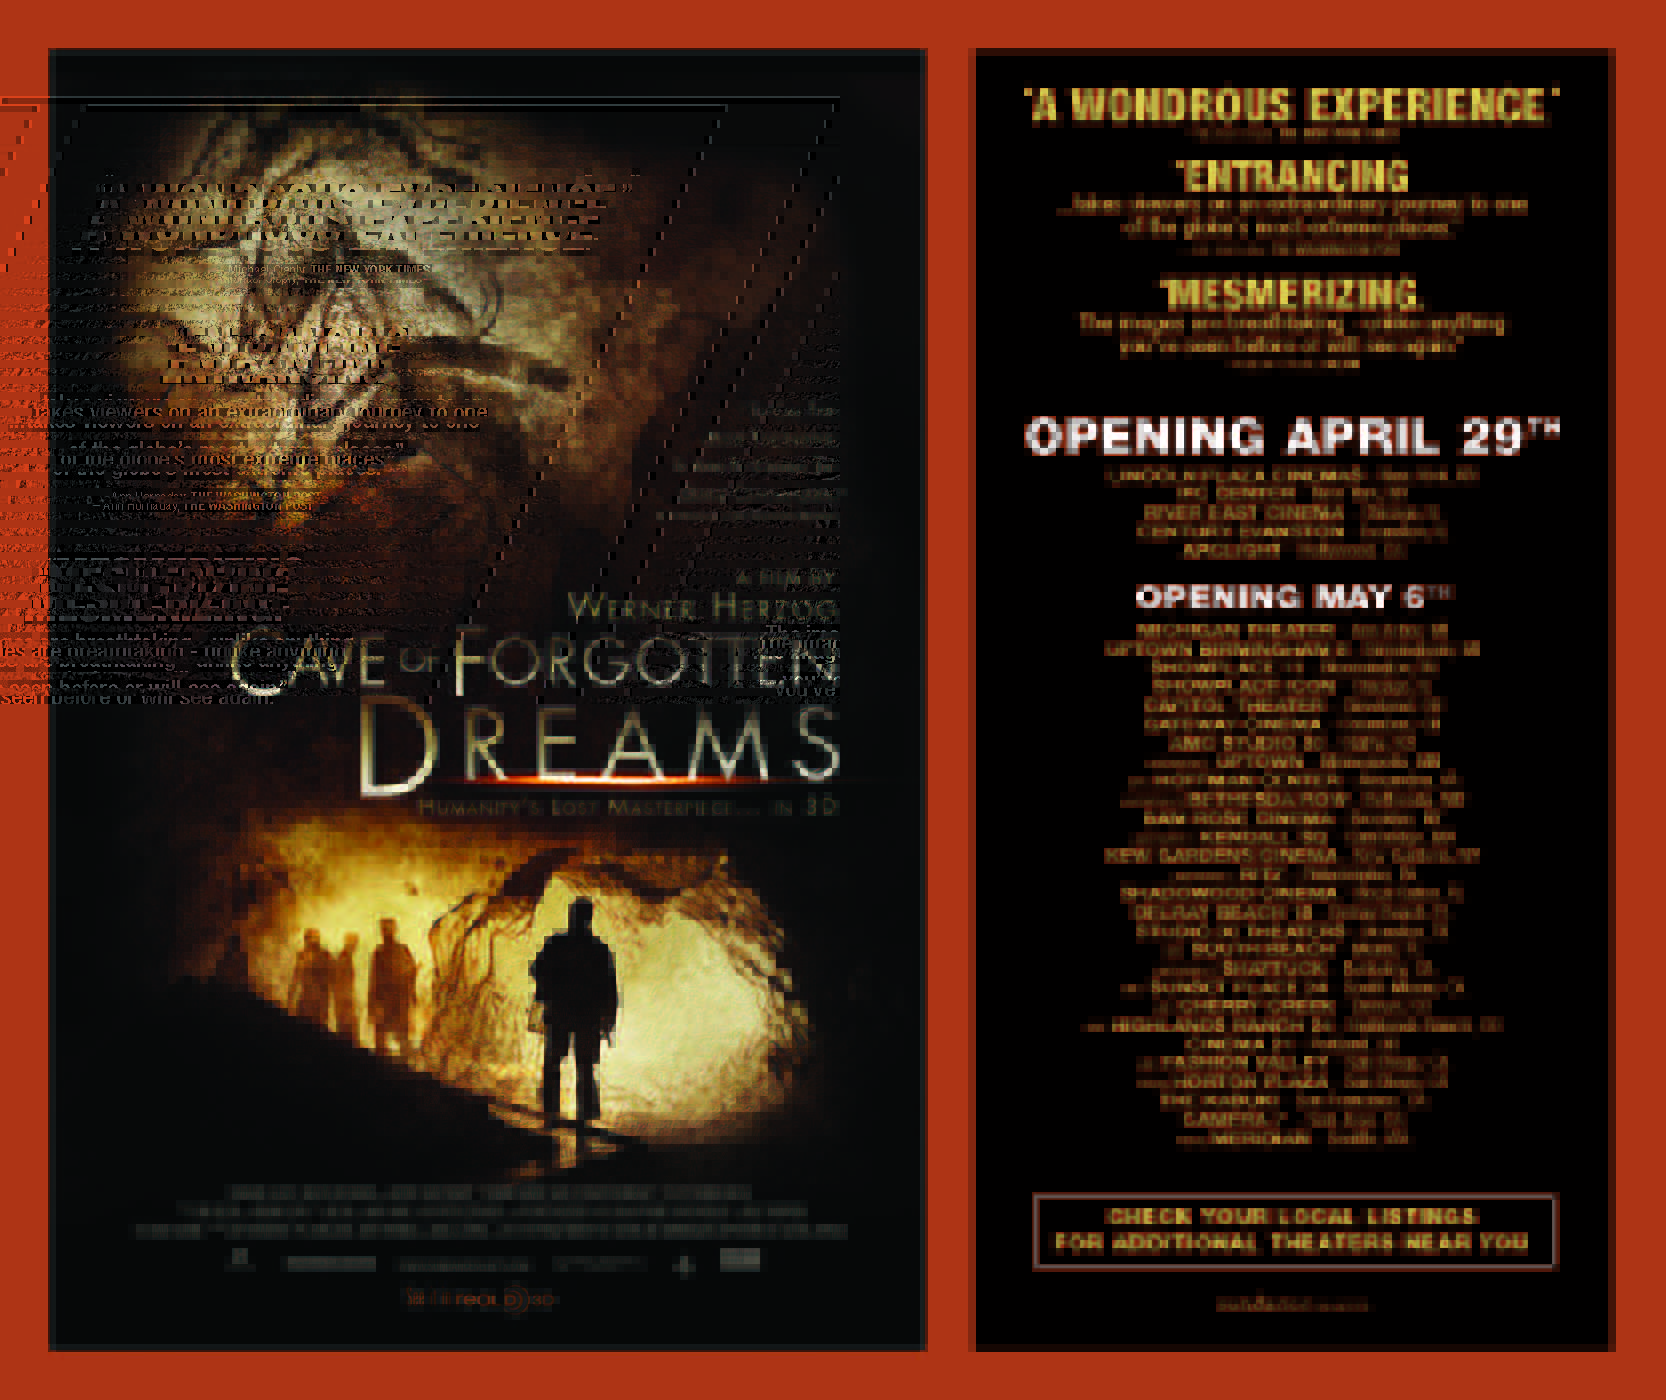 Cave of Forgotten Dreams – Opens tomorrow in Philadelphia